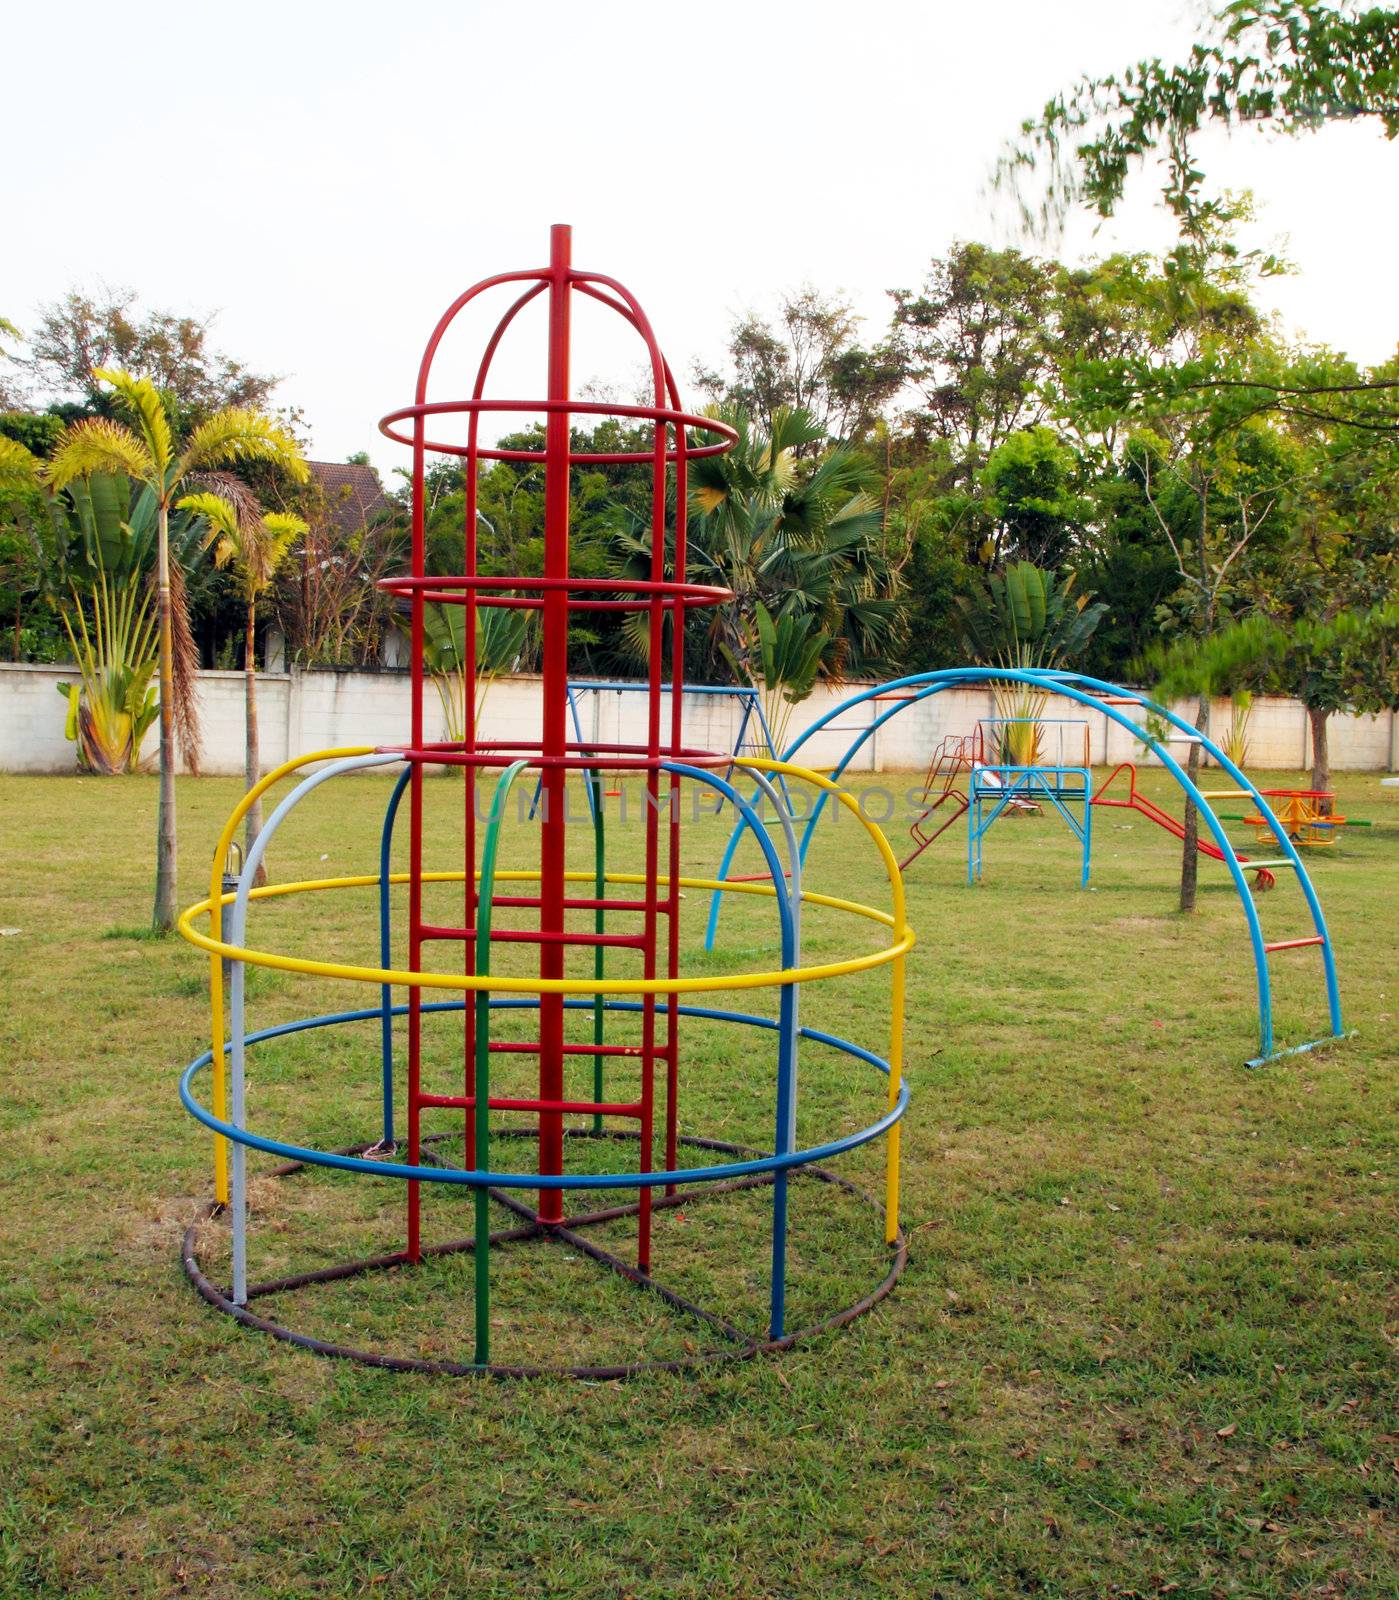 toy of playground without children by geargodz